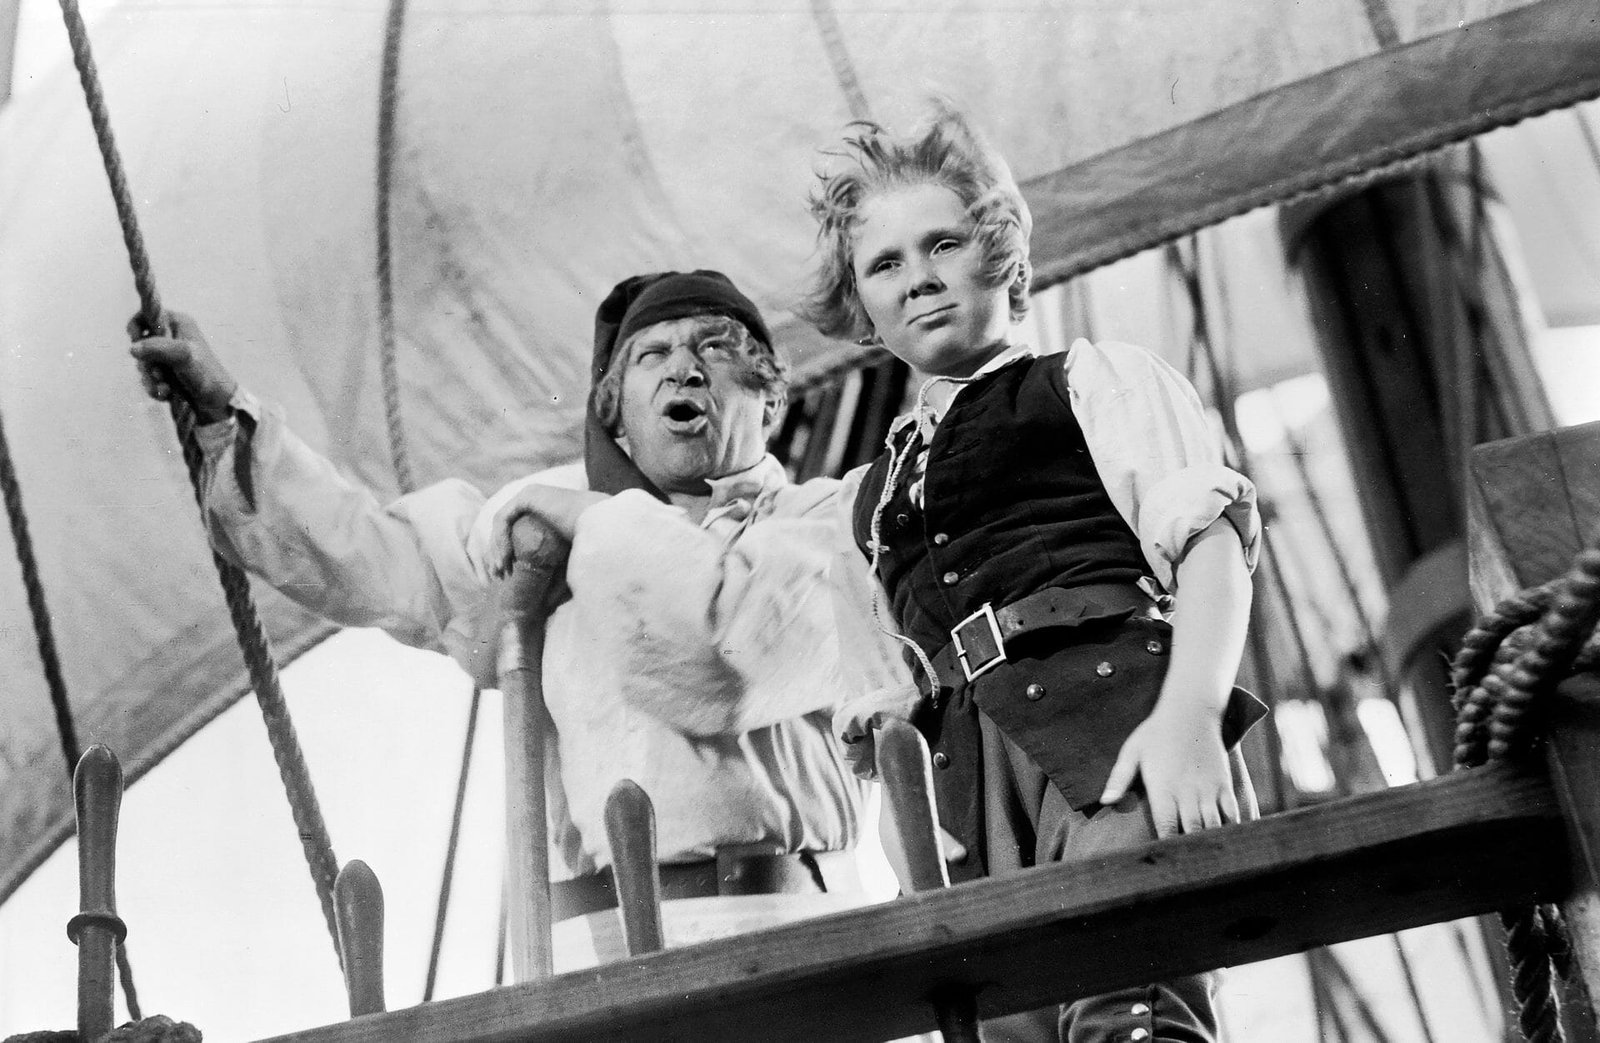 Best pirate movies: Long John Silver’s Return to Treasure Island (1954)